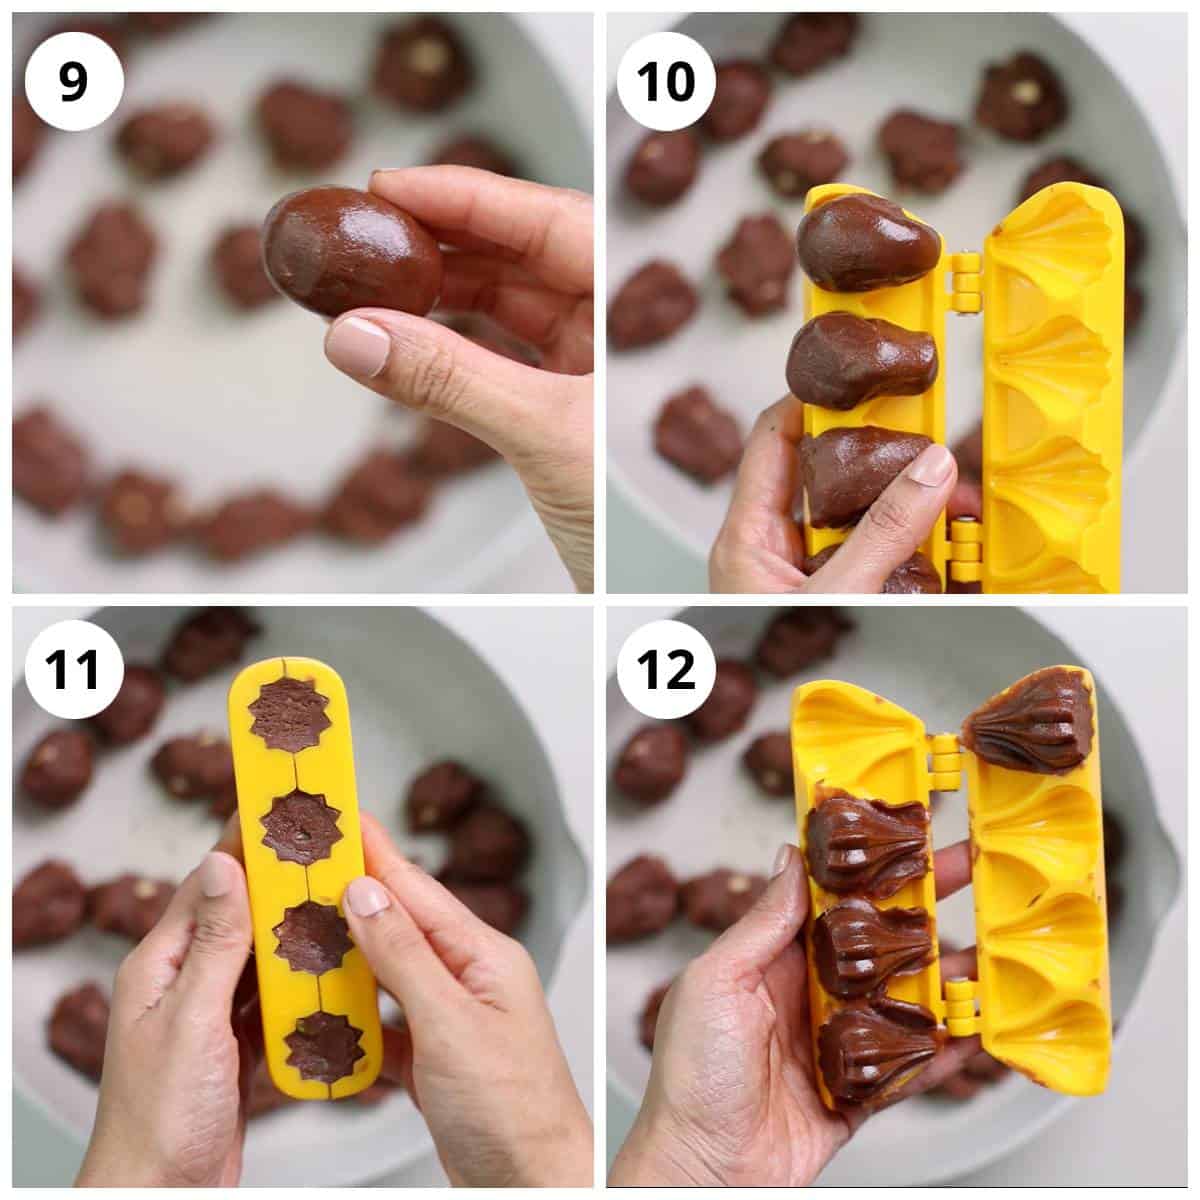 Steps for shaping the chocolate modak using modak mold